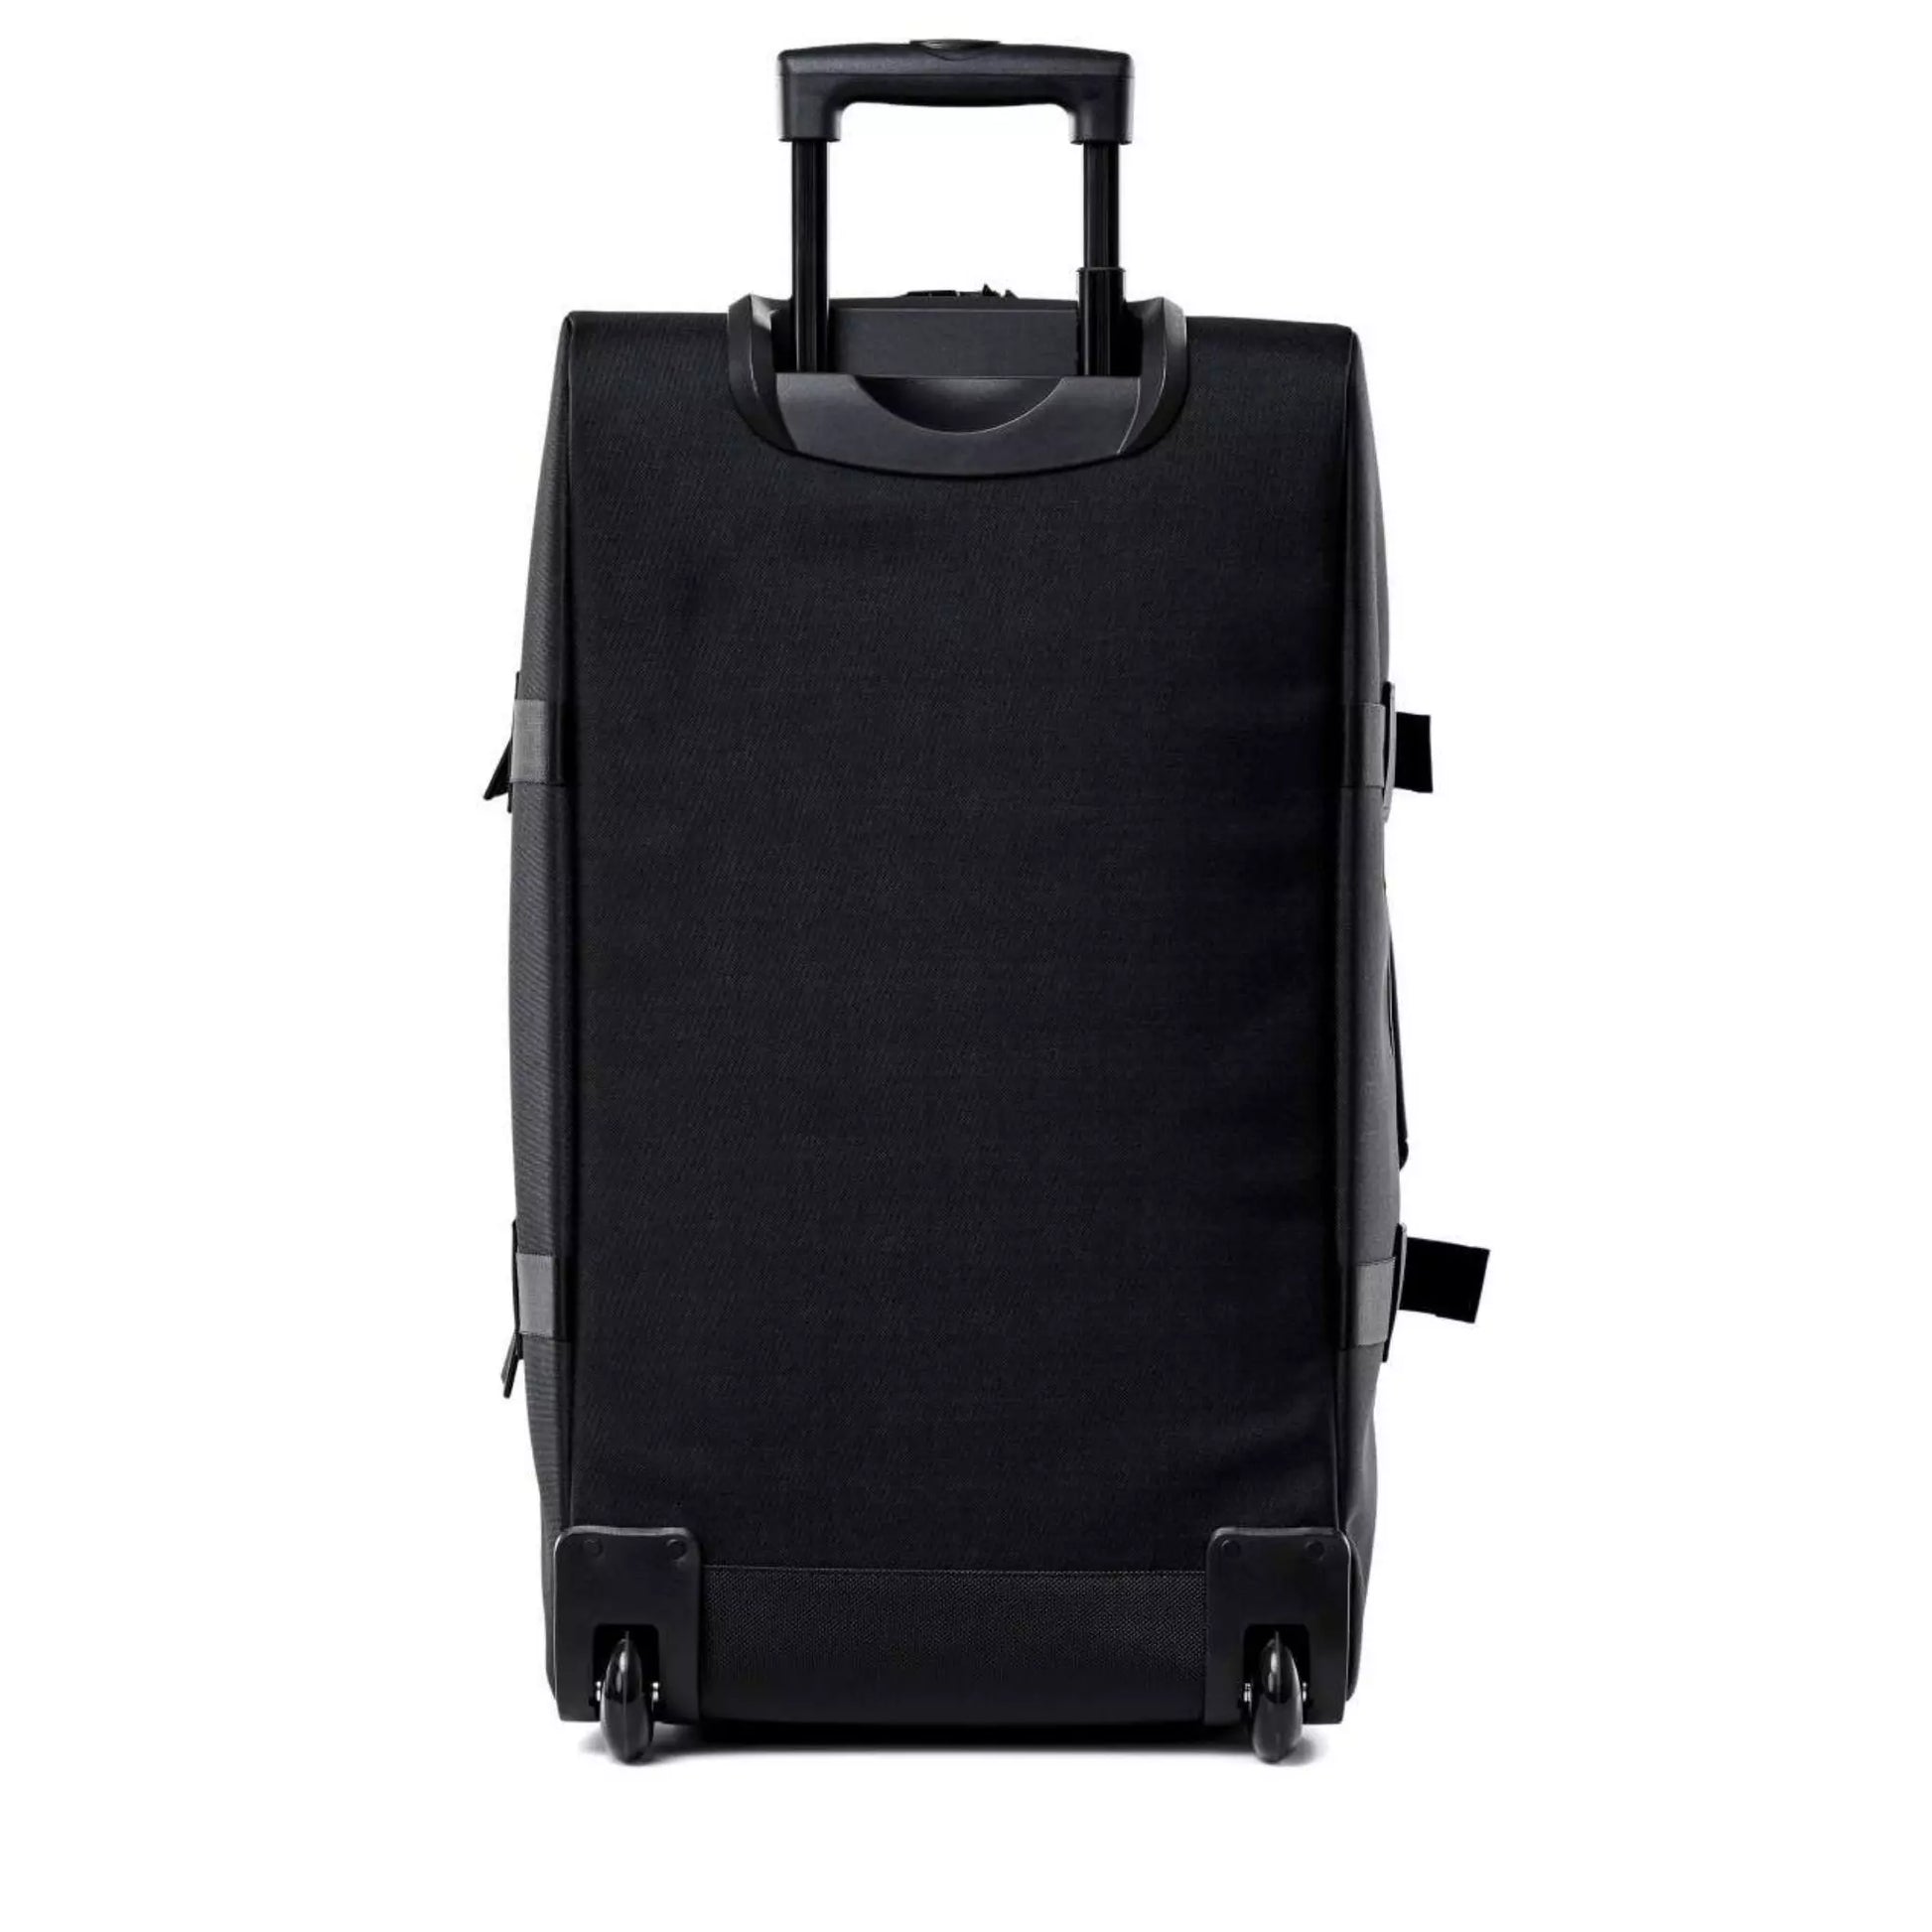 Rains waterproof travel bag large black for men and women back view